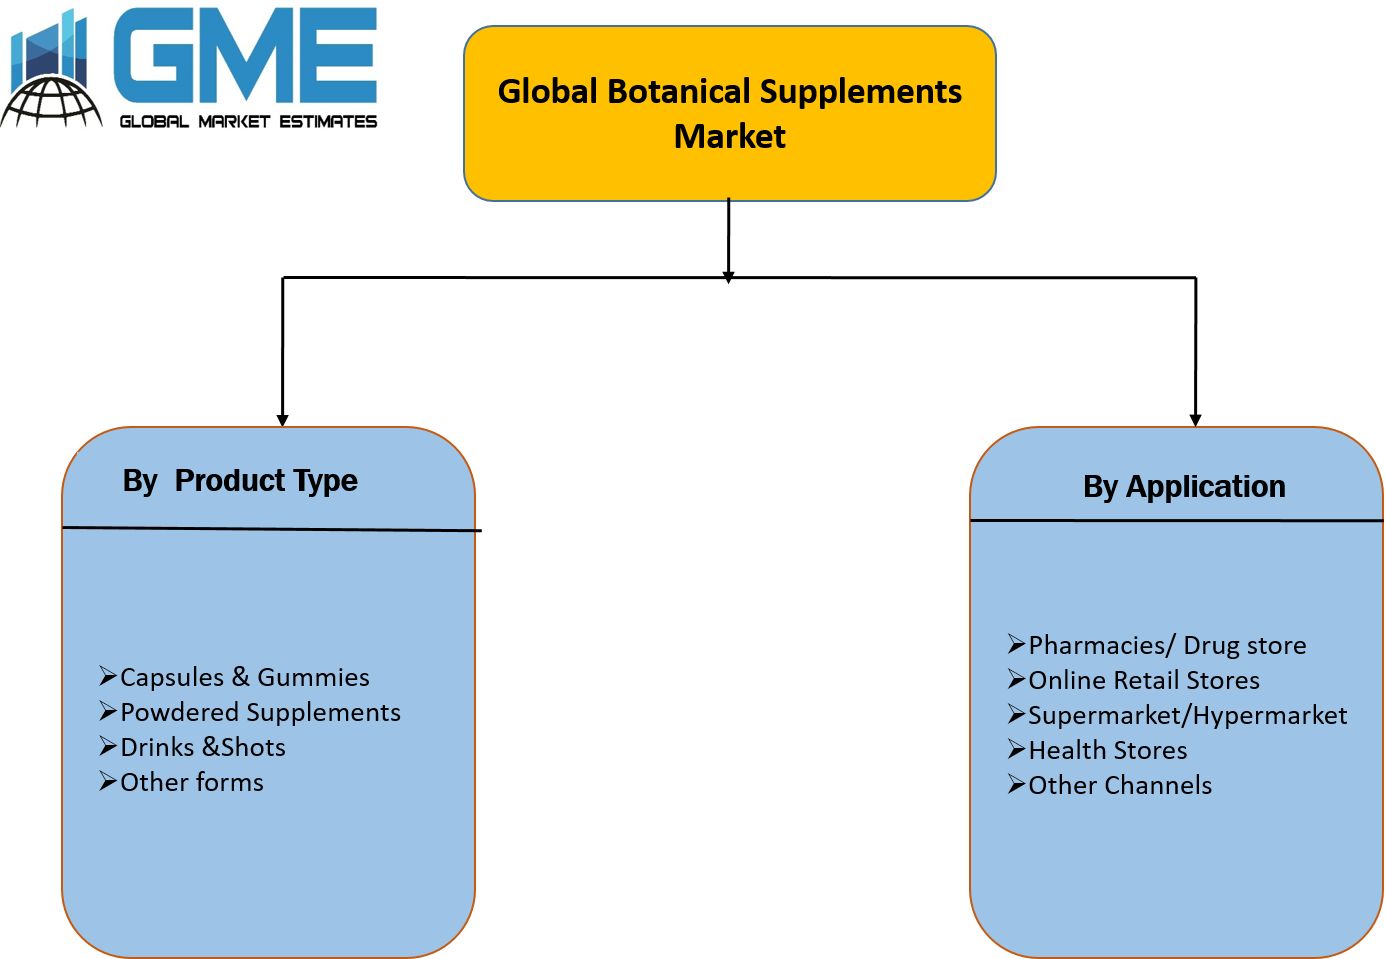 Global Botanical Supplements Market Segmentation